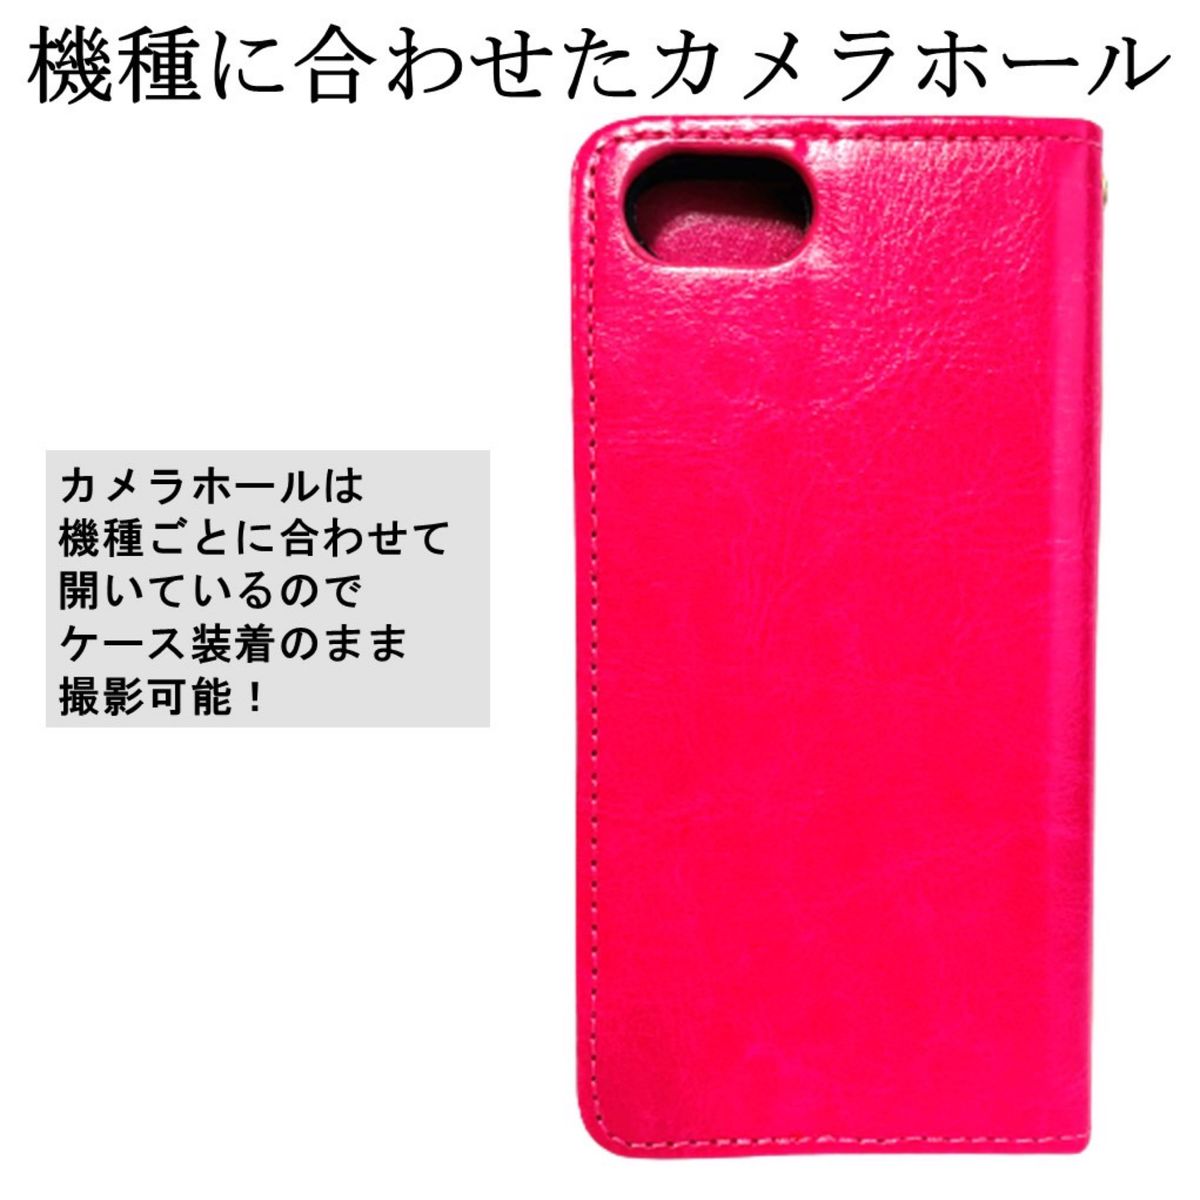 iPhone SE2/3 6 6S 7 8 アイフォン 手帳型 スマホカバー スマホケース シンプル オシャレ カードポケット 